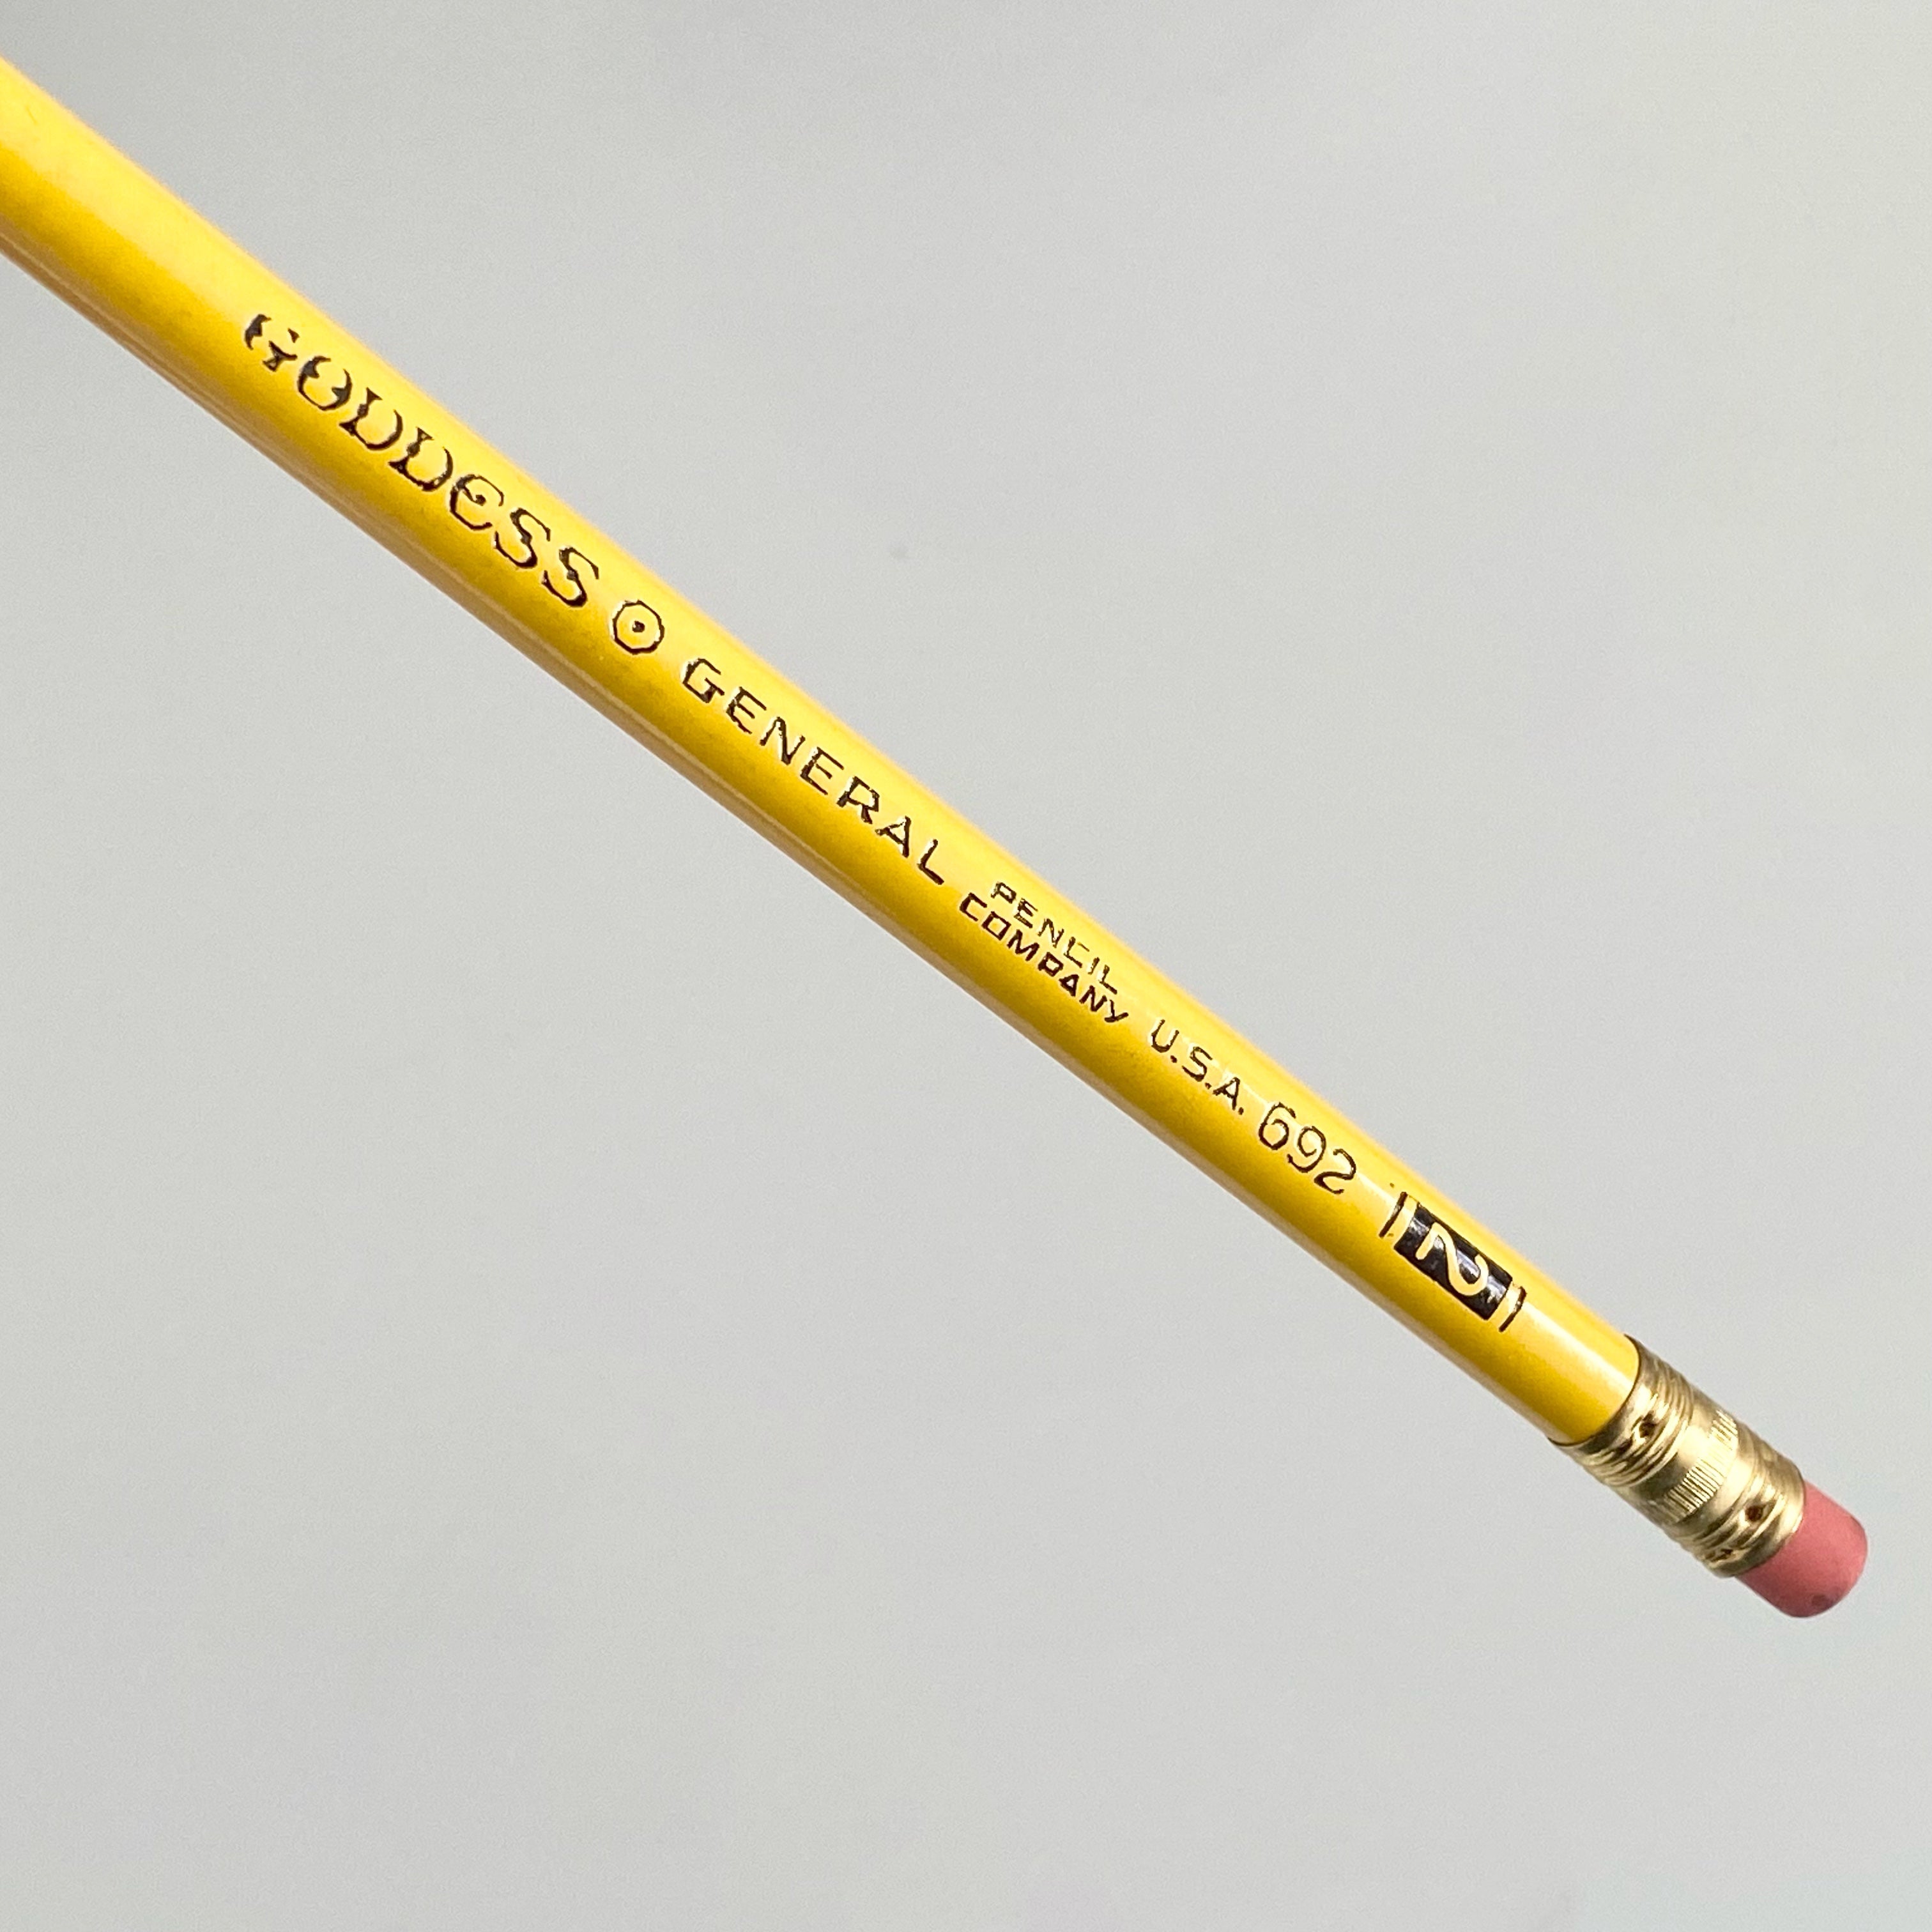 Lápiz Goddess 692 #2. General Pencil Company